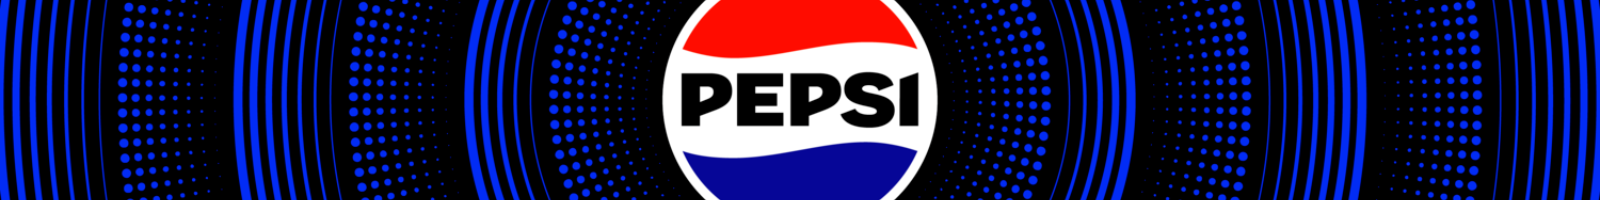 Pepsi Banner